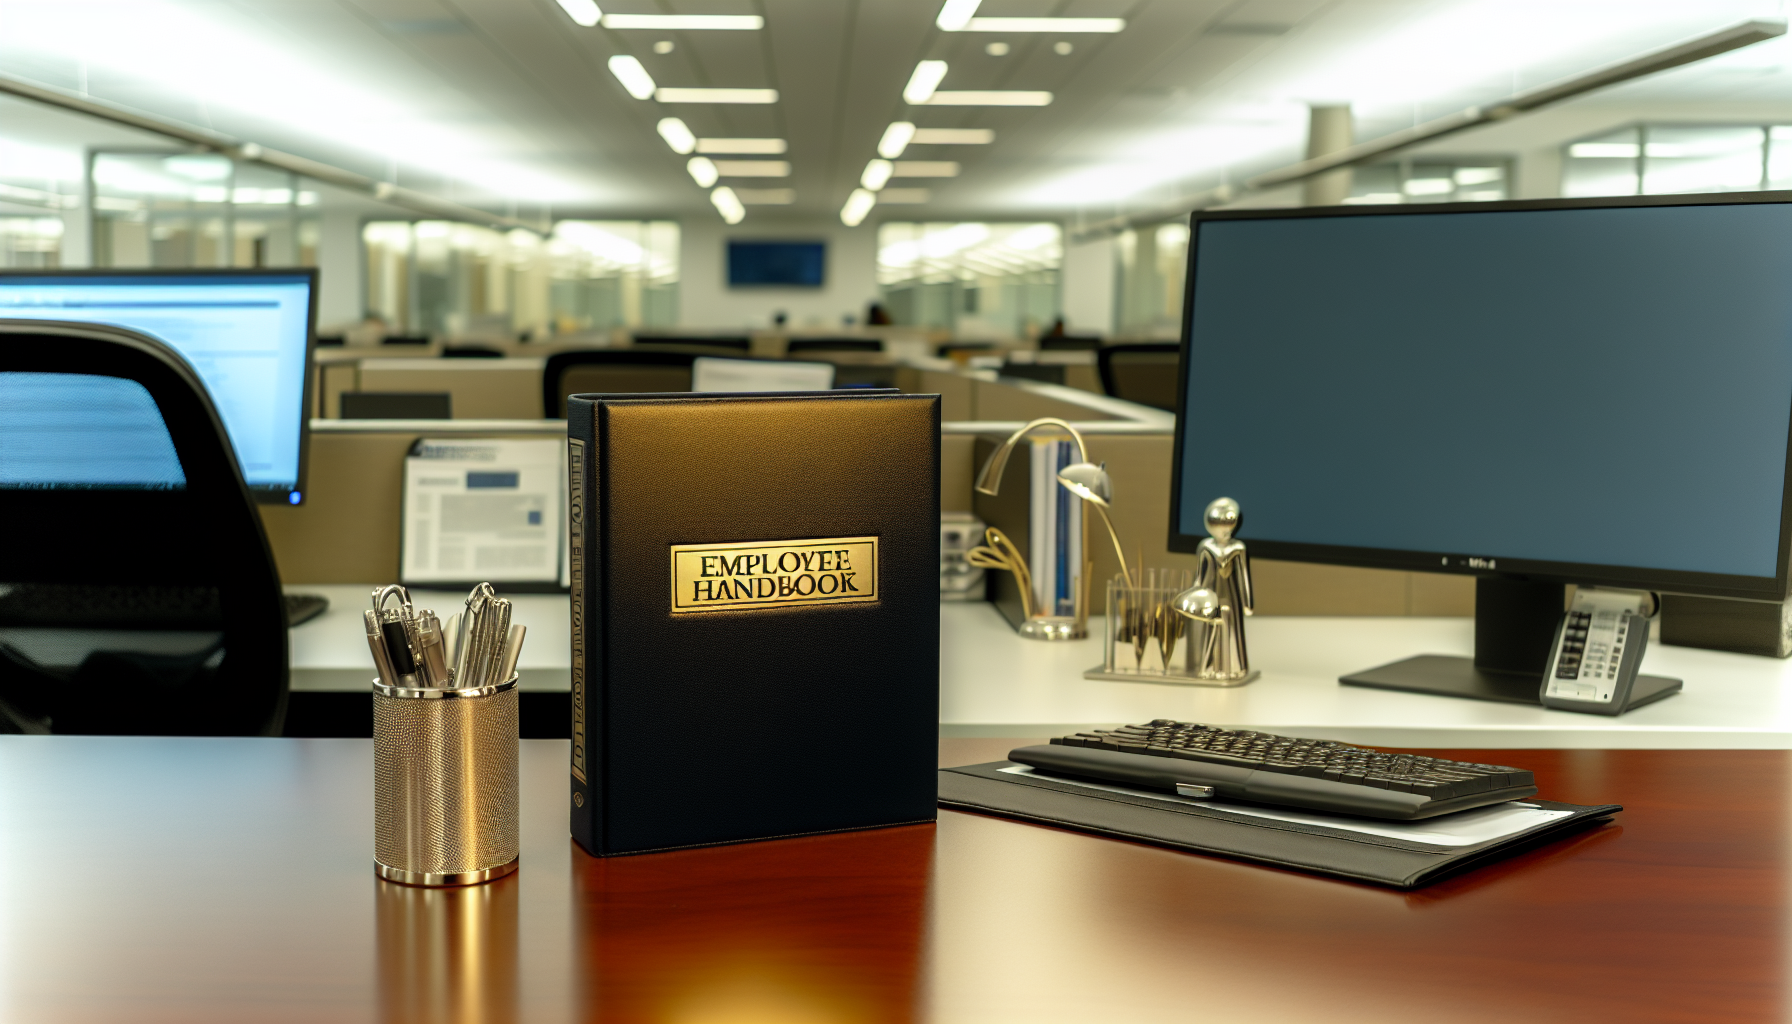 Employee handbook binder on a desk